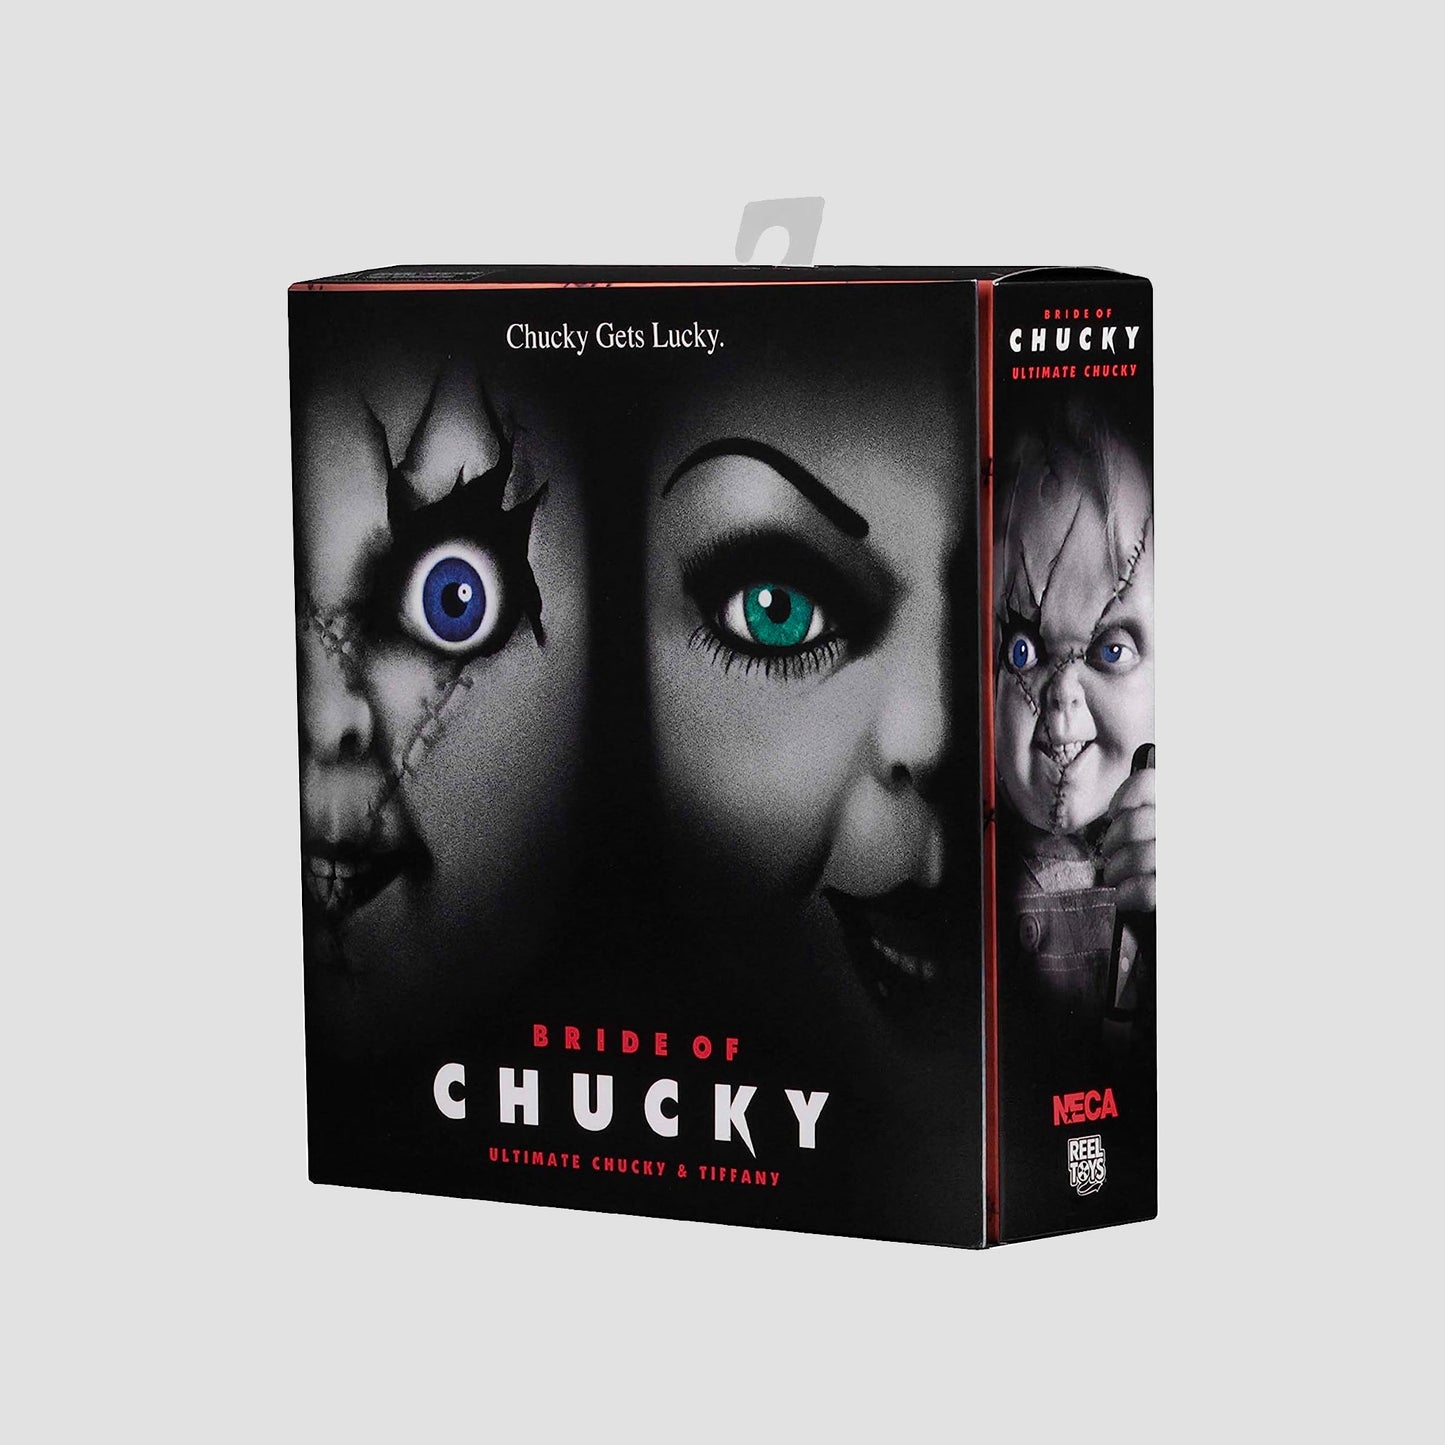 Chucky & Tiffany (Bride of Chucky) NECA Ultimate Edition Action